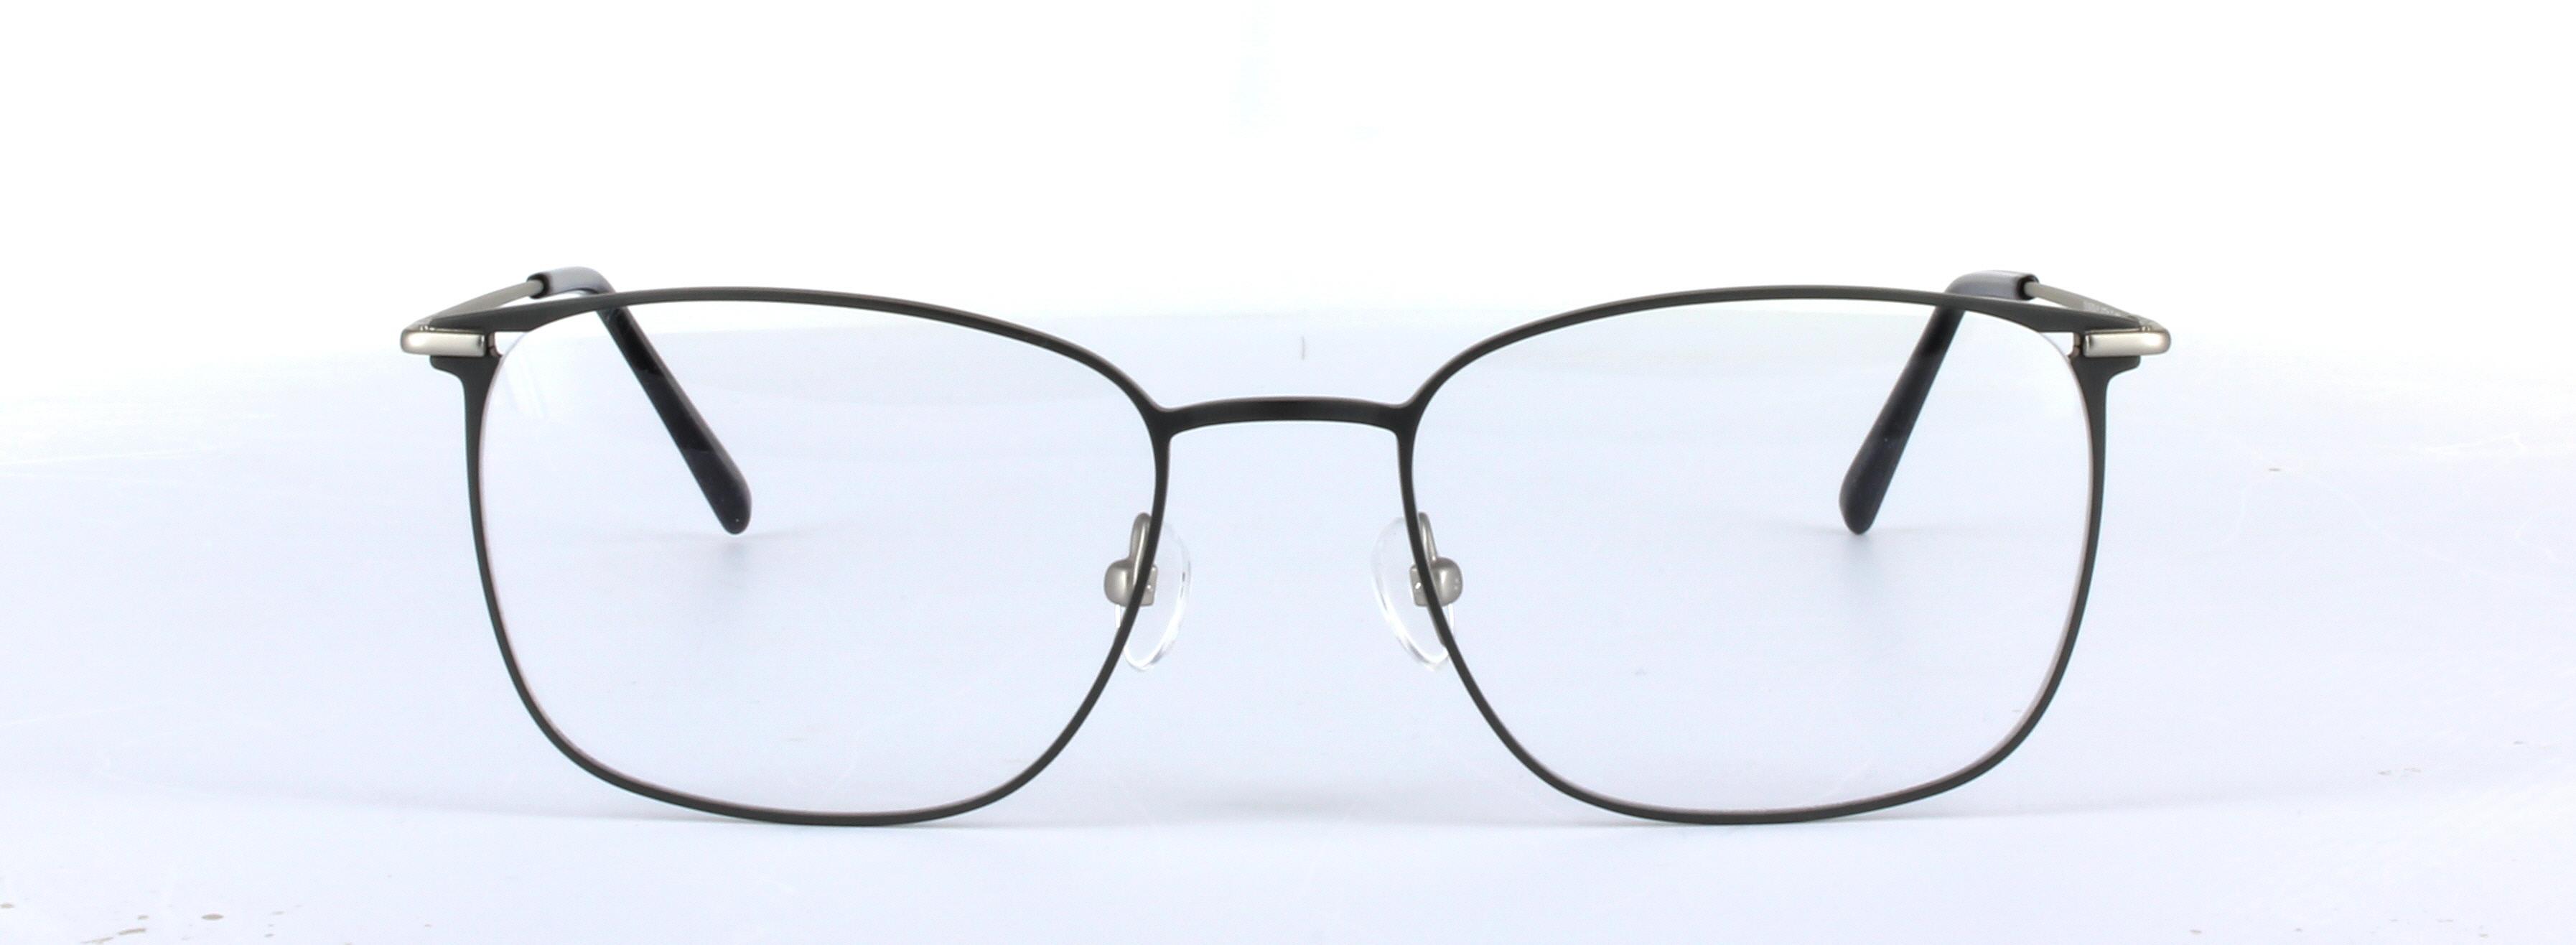 Hayden Olive Full Rim Rectangular Metal Glasses - Image View 5